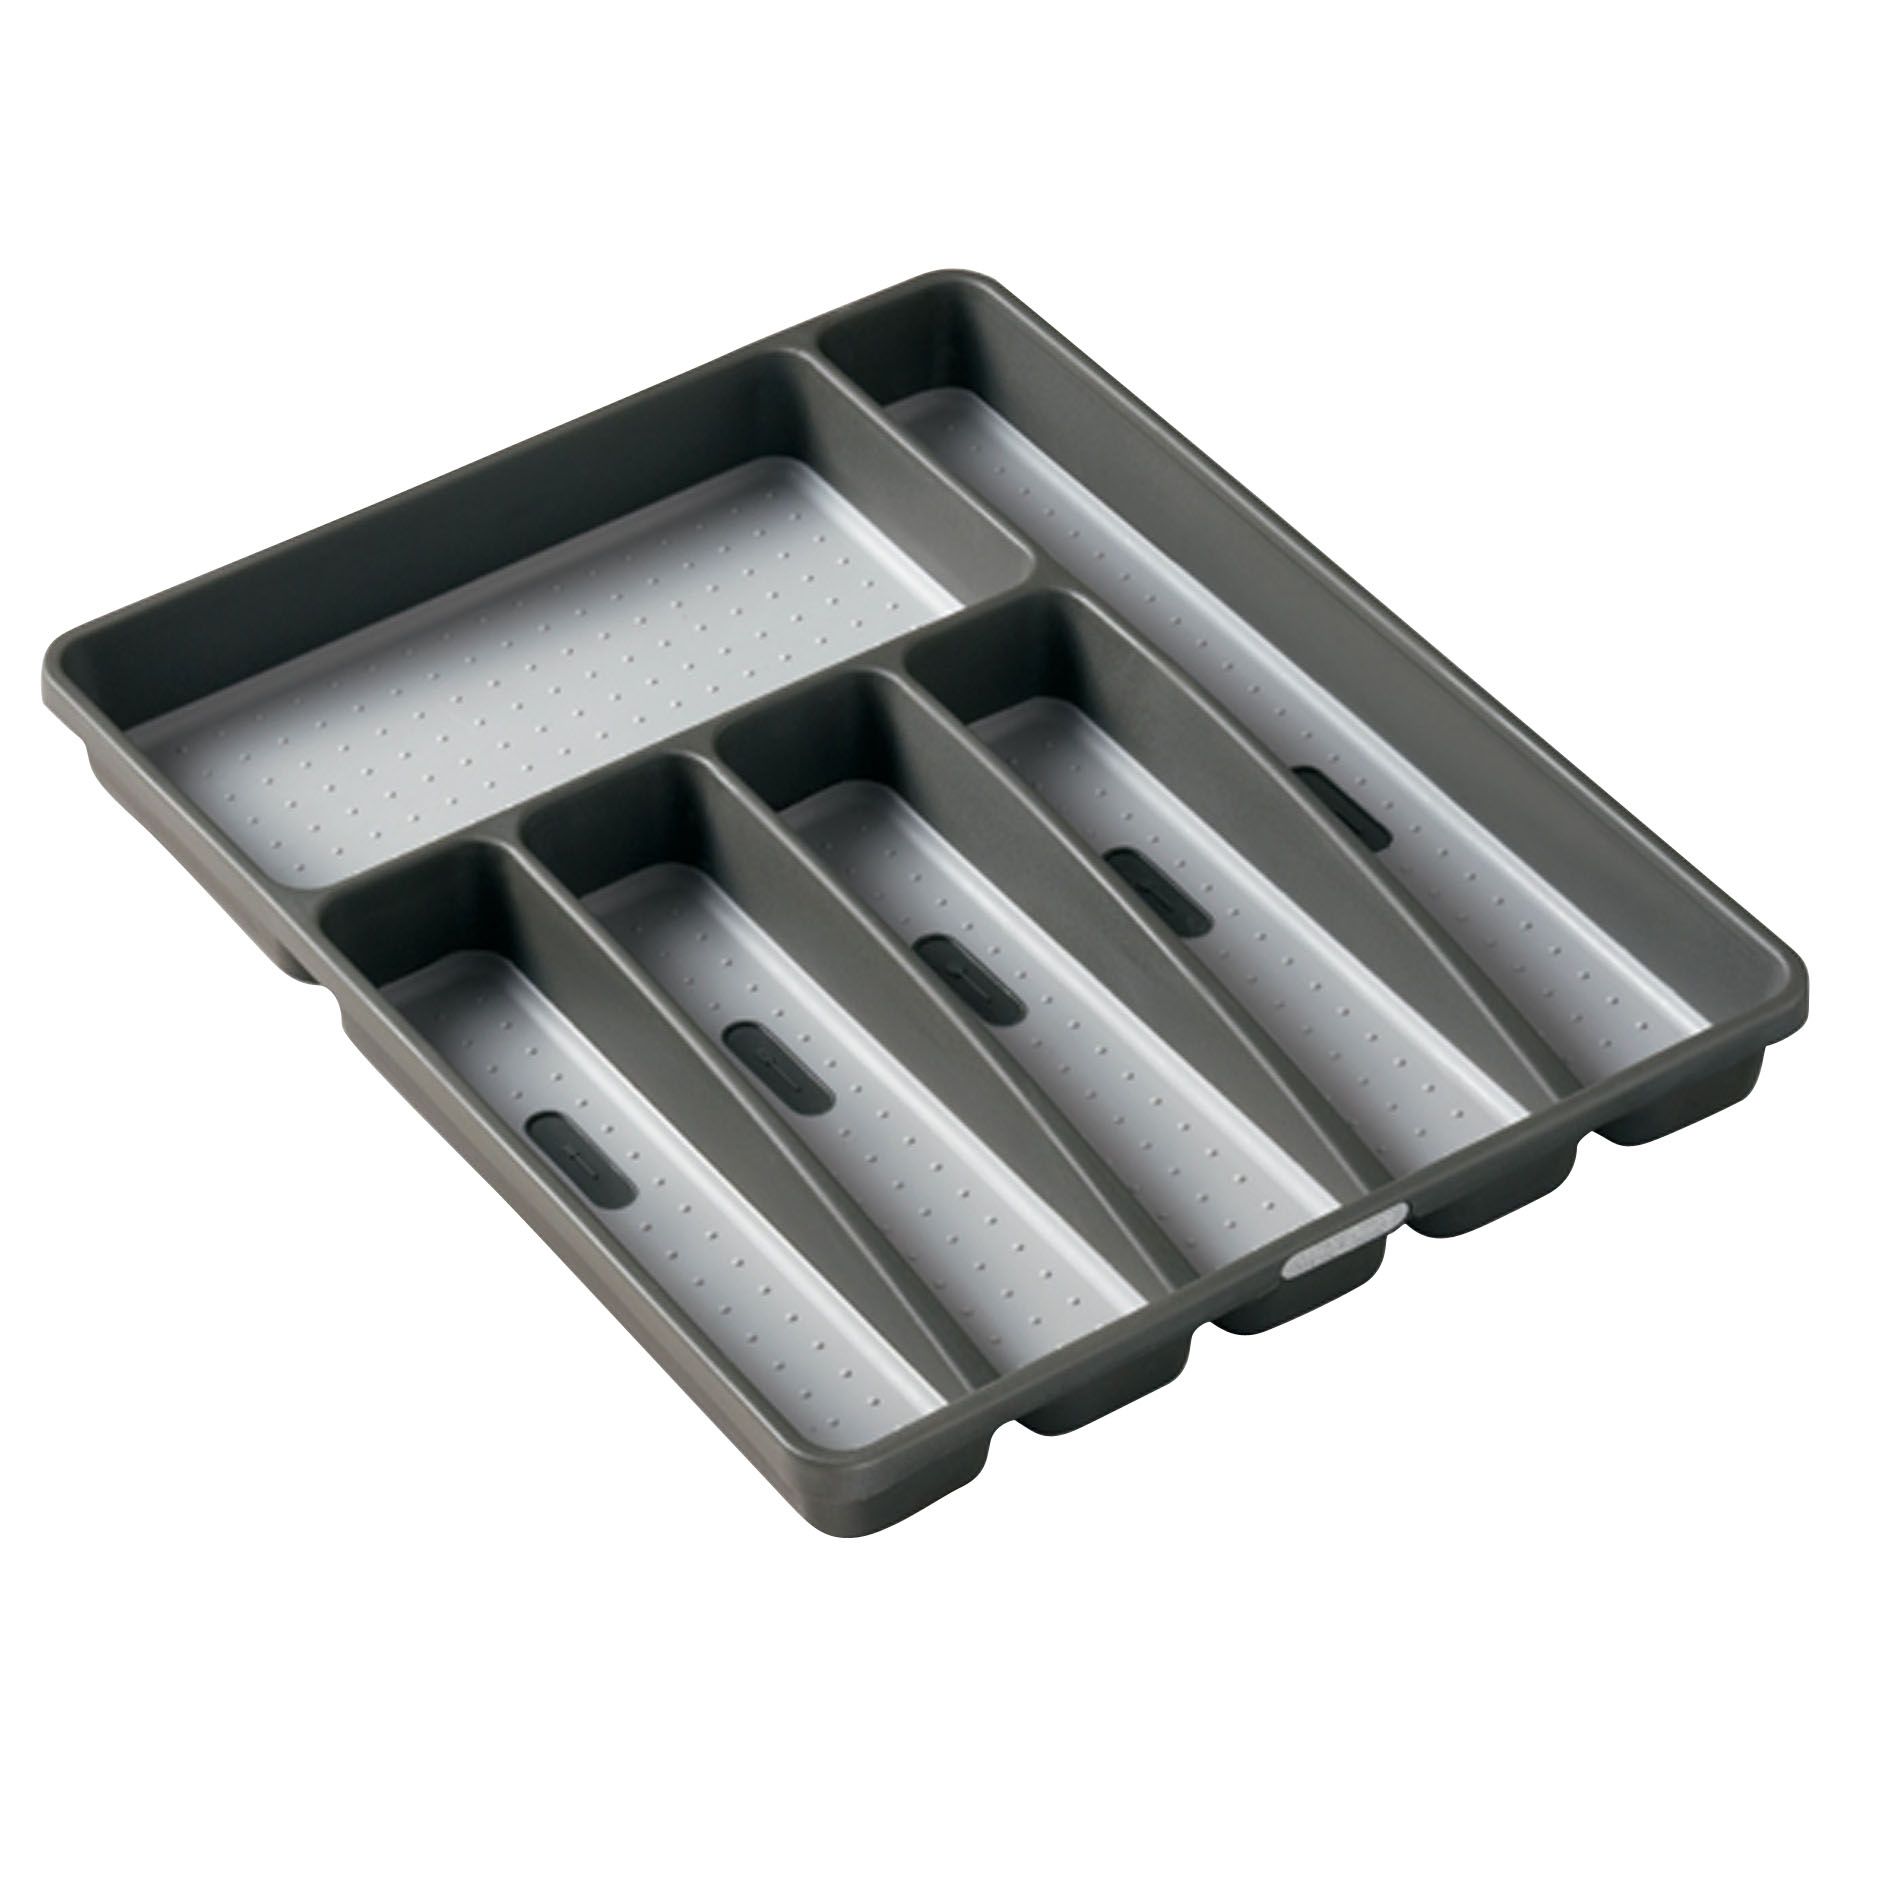 MadeSmart Housewares Six Compartment Large Silverware Tray Granite